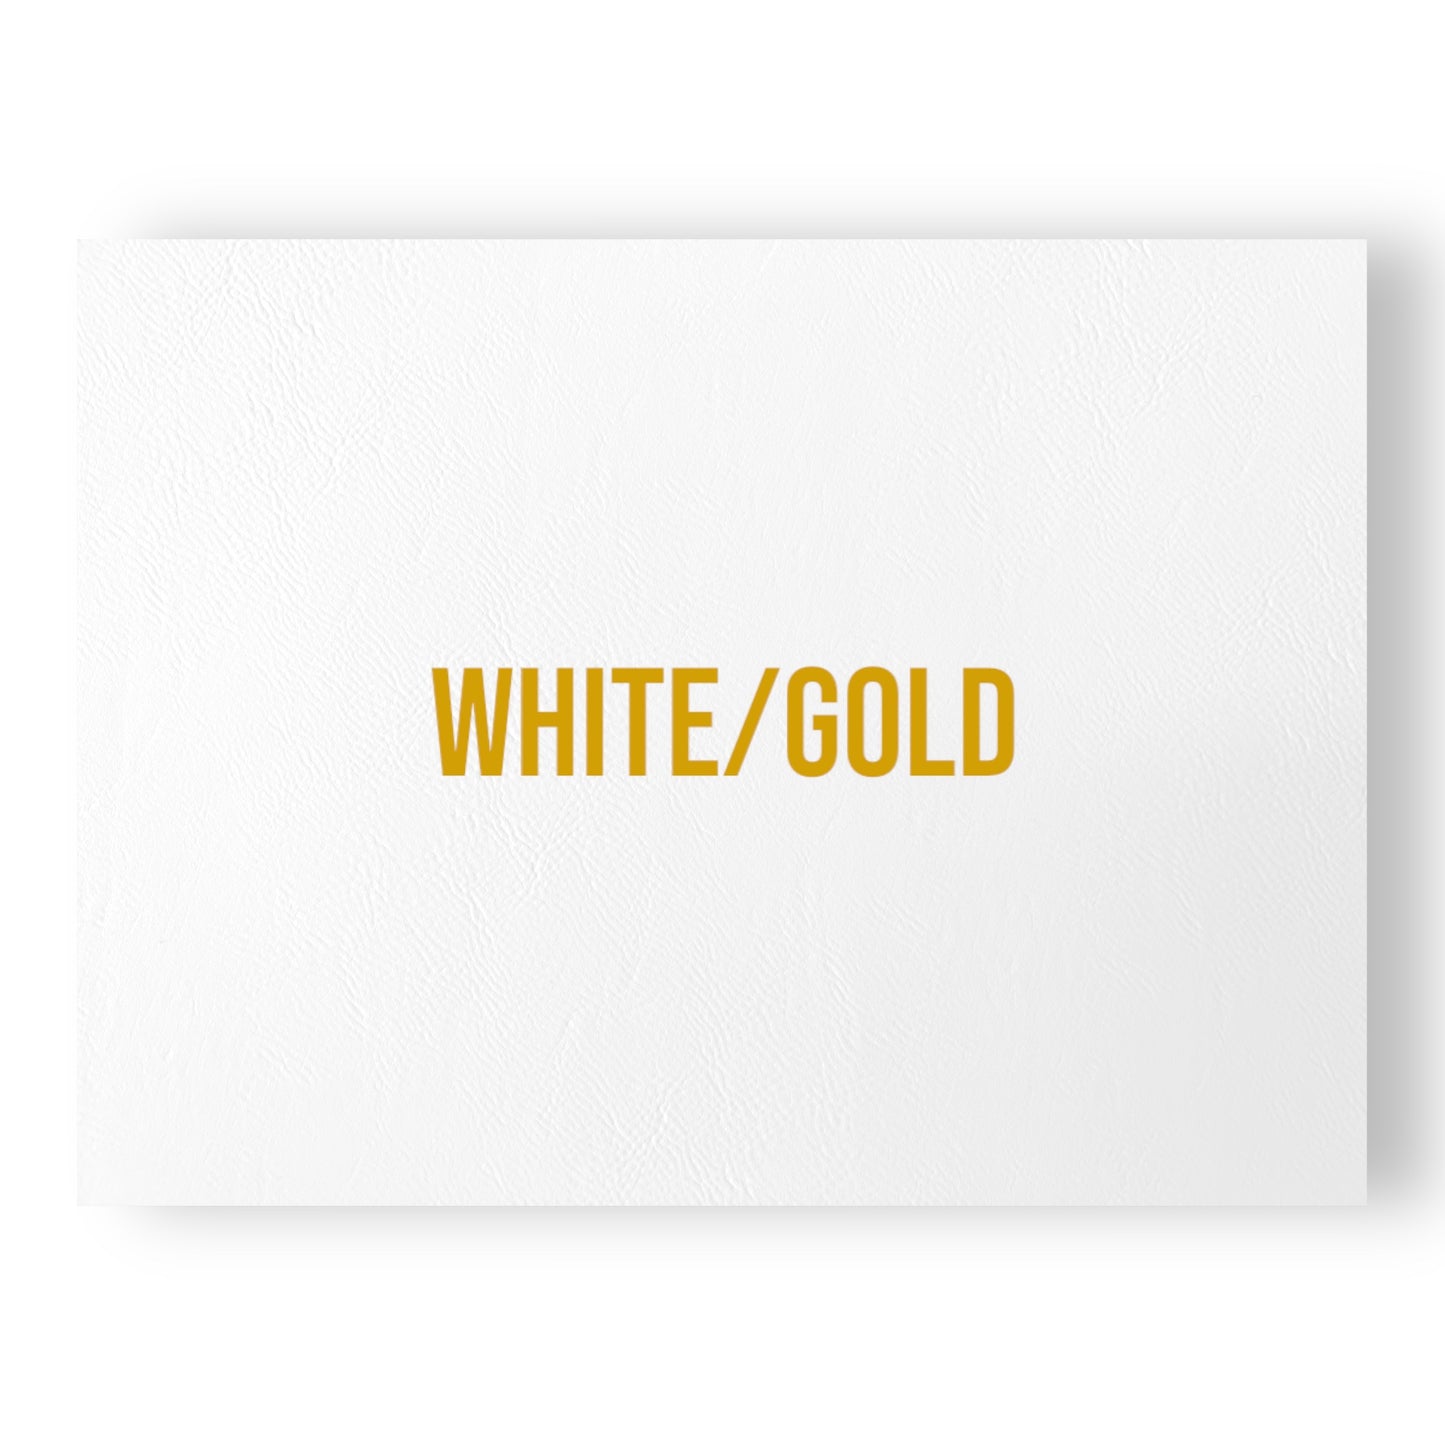 WHITE/GOLD HYDBOND LEATHERETTE SHEET (12"x24")